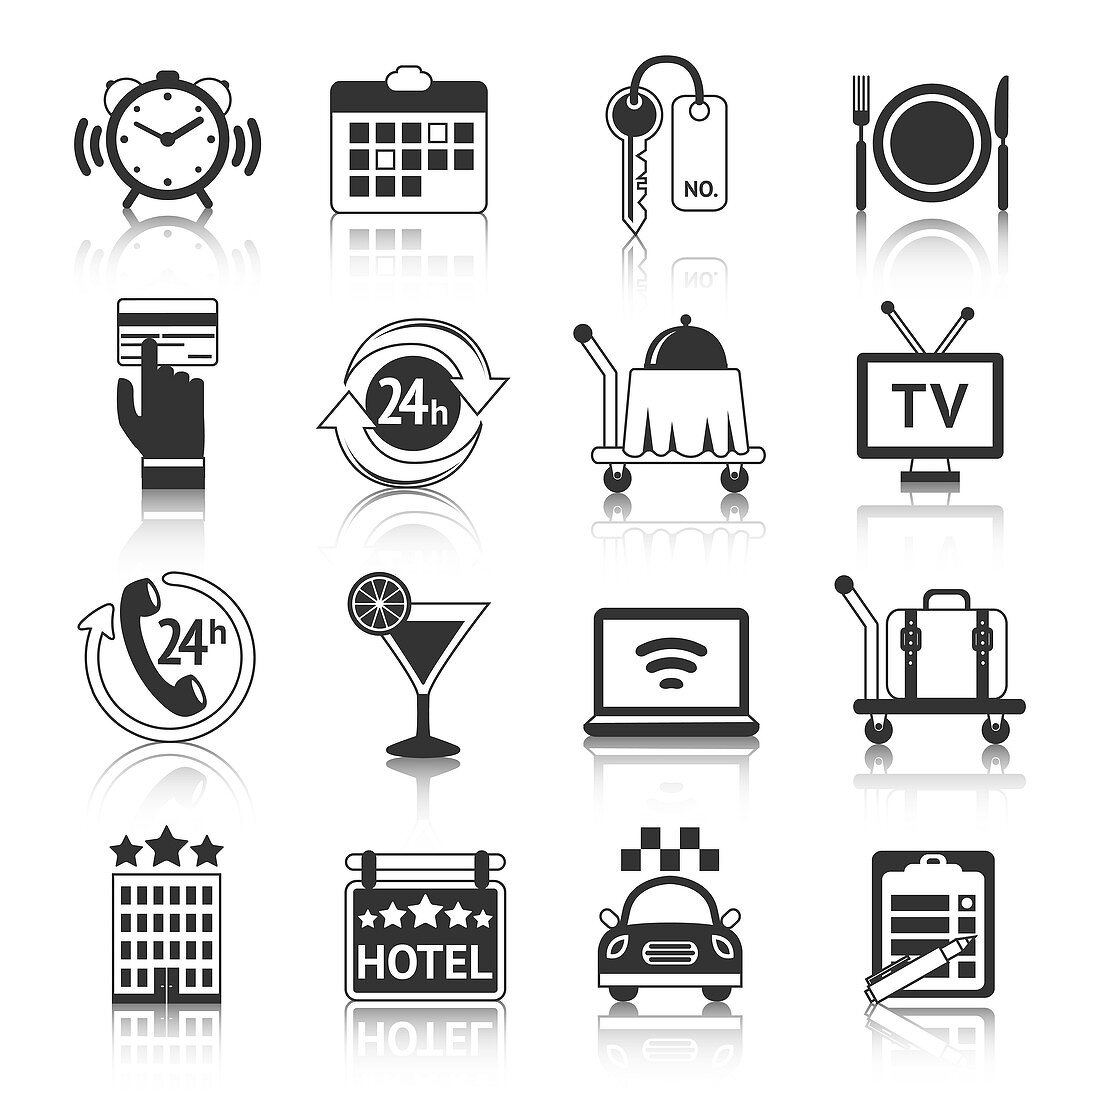 Hotel icons, illustration